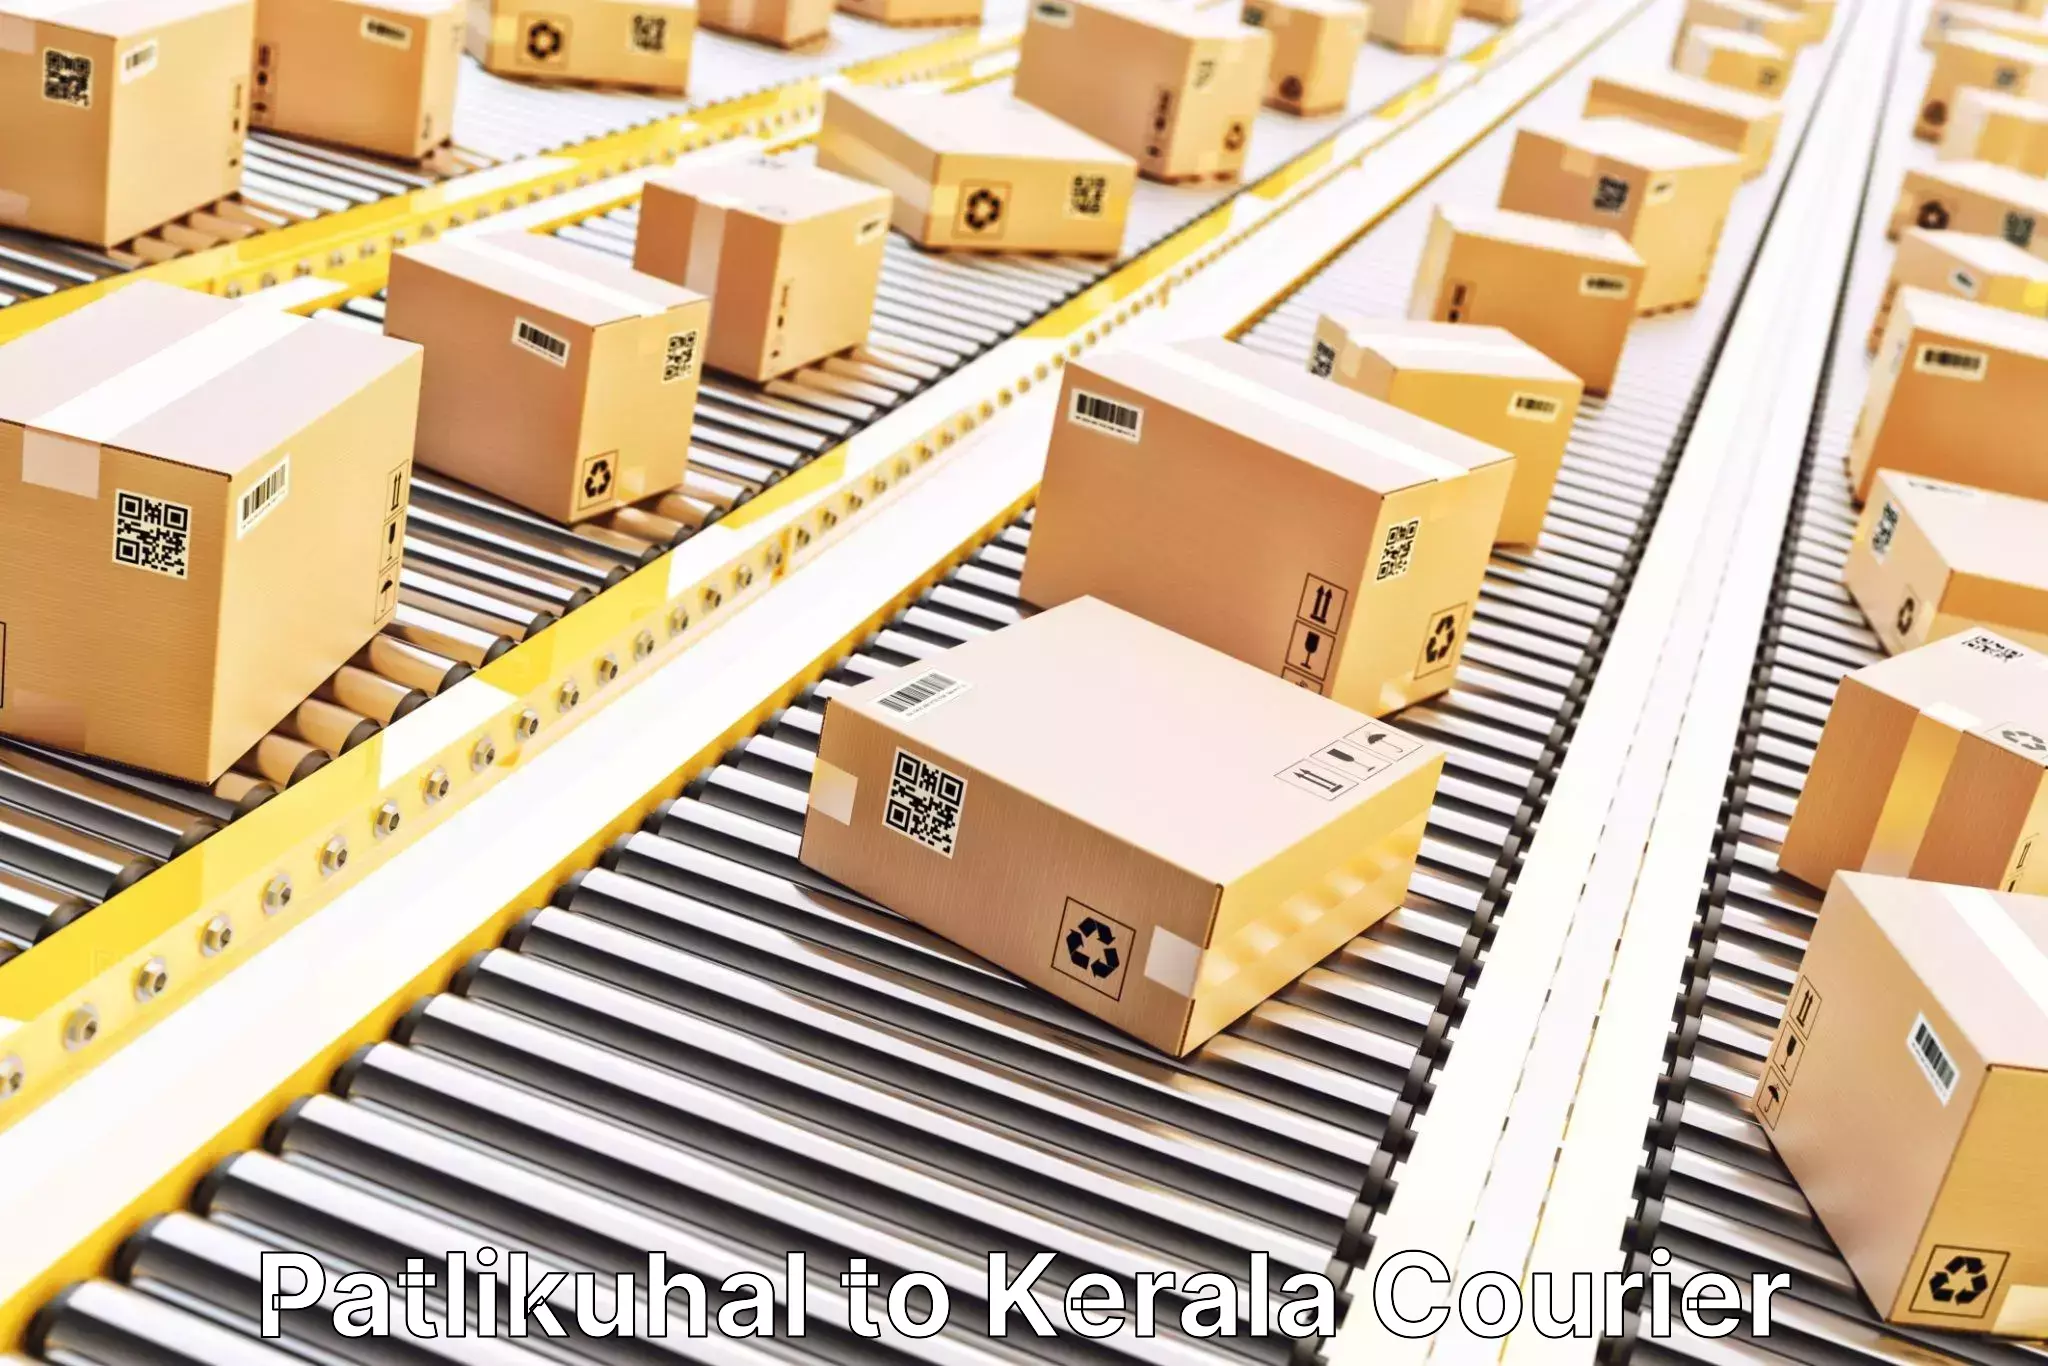 Innovative logistics solutions Patlikuhal to Kerala